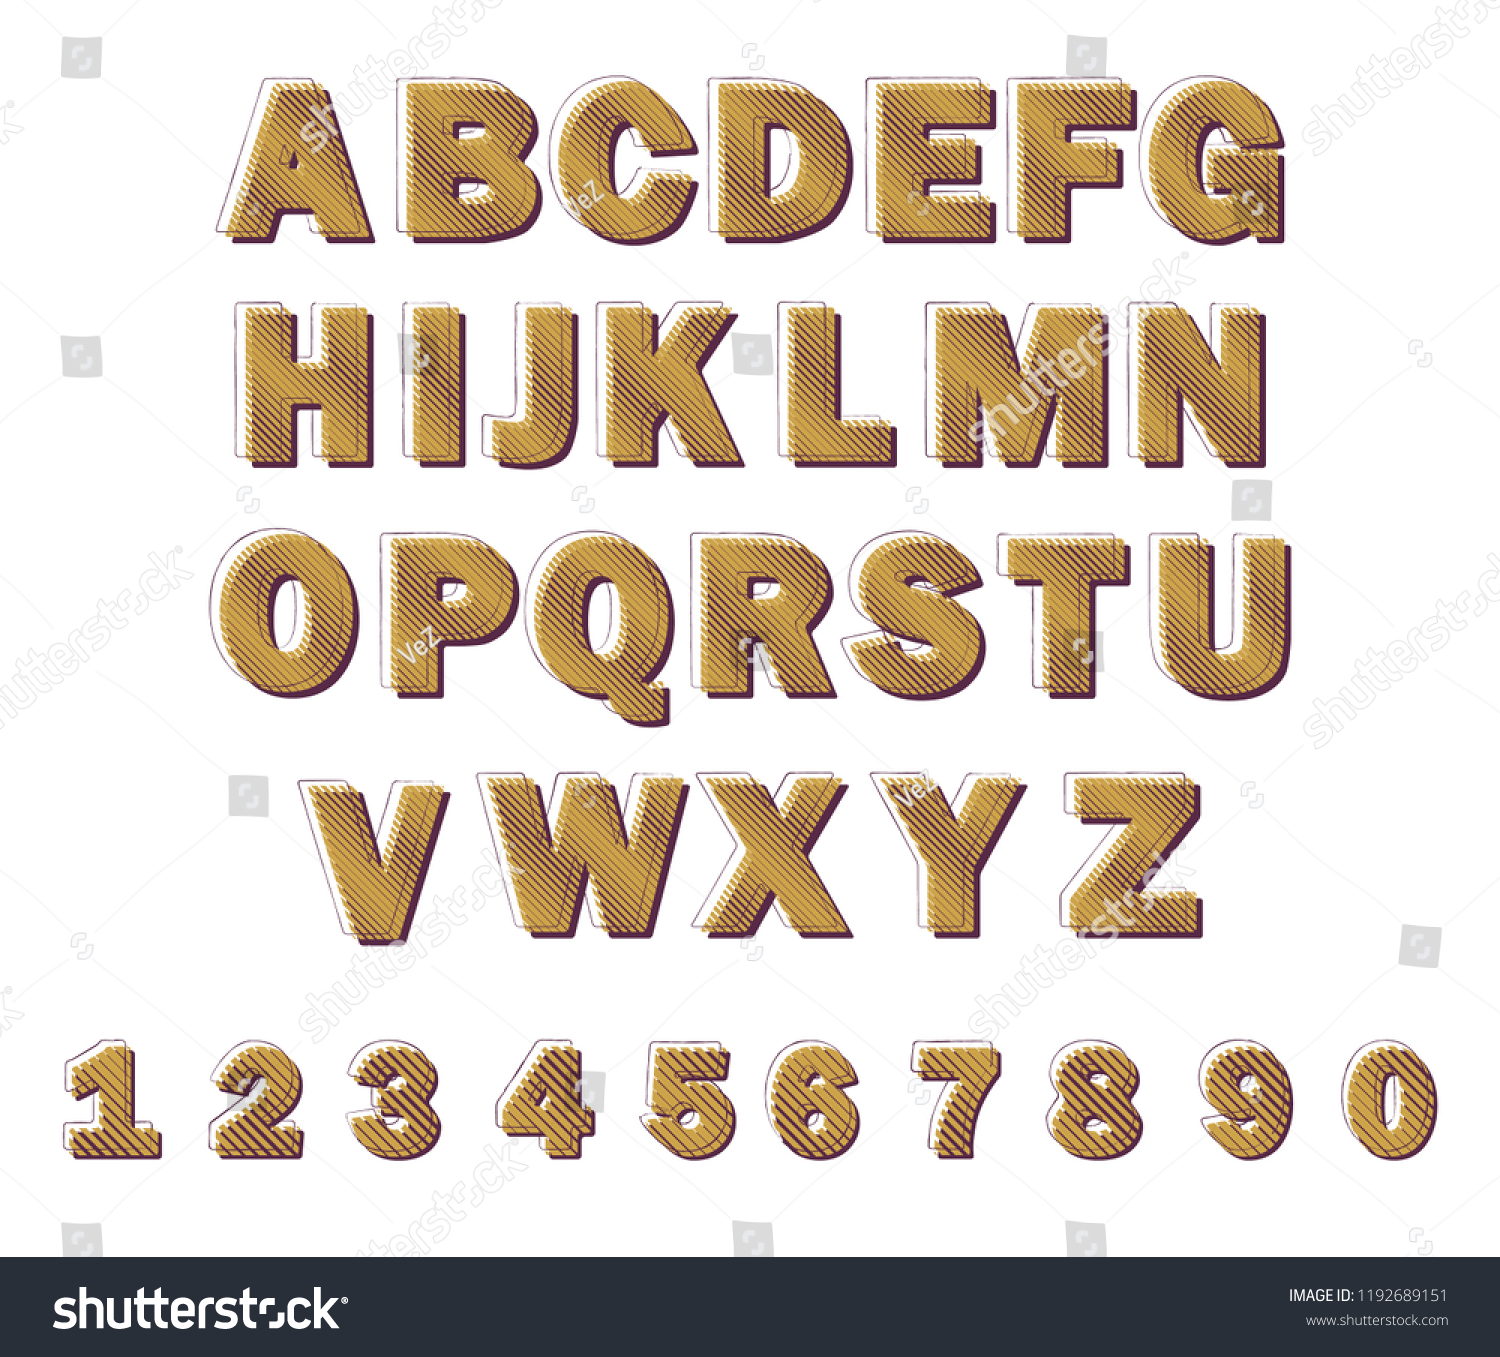 Vektor Stok Striped Uppercase Letters English Alphabet Numbers Tanpa